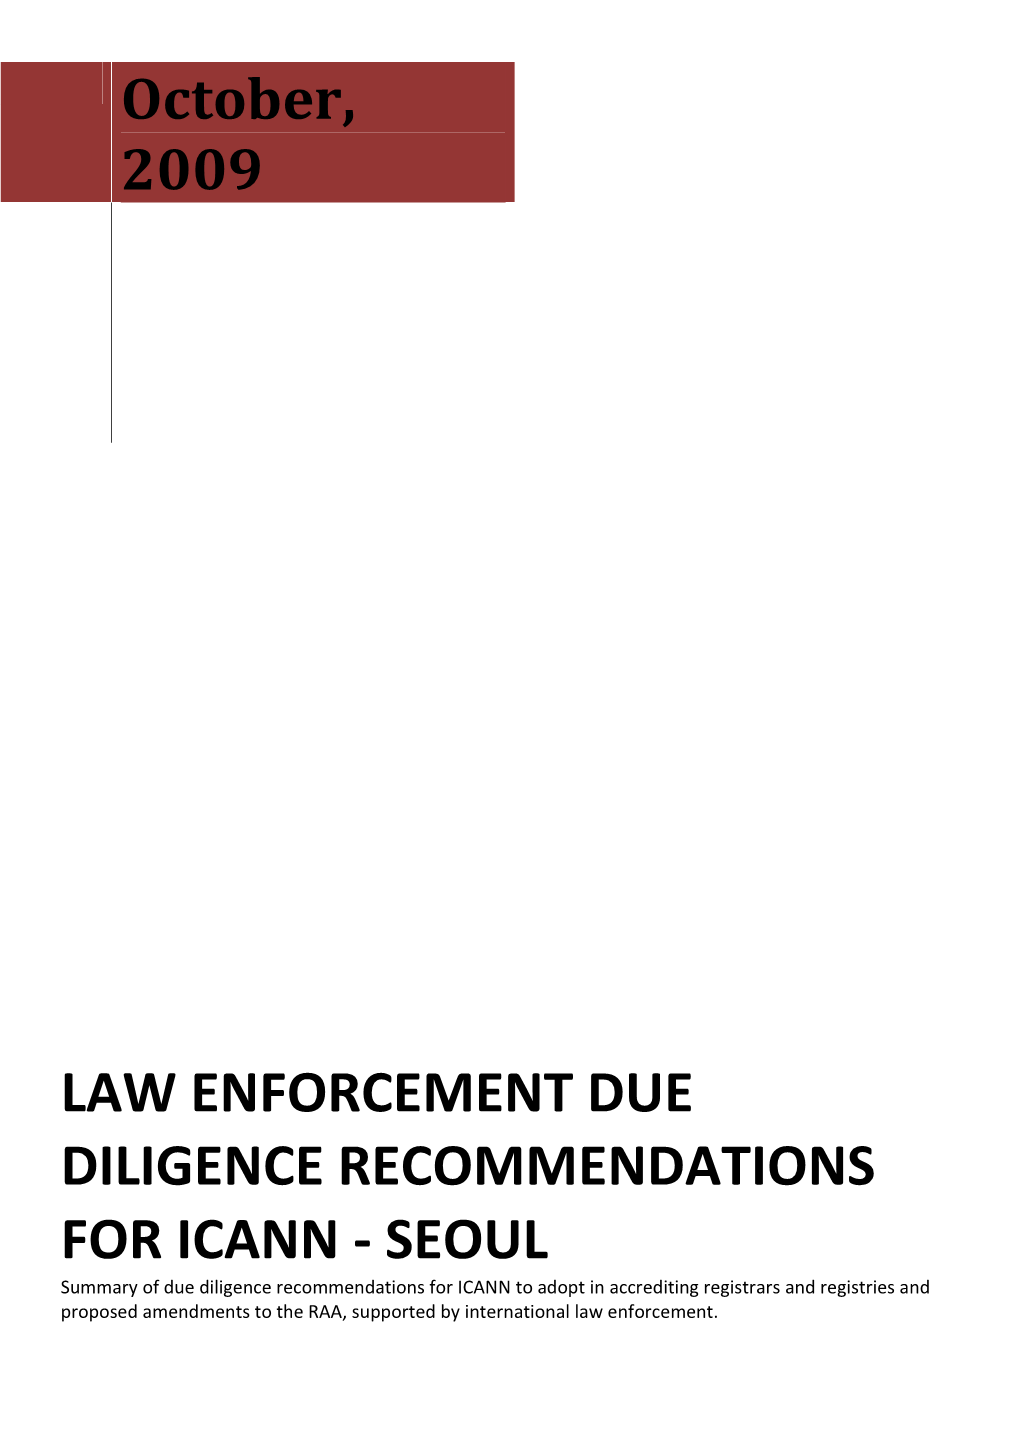 October, 2009 LAW ENFORCEMENT DUE DILIGENCE